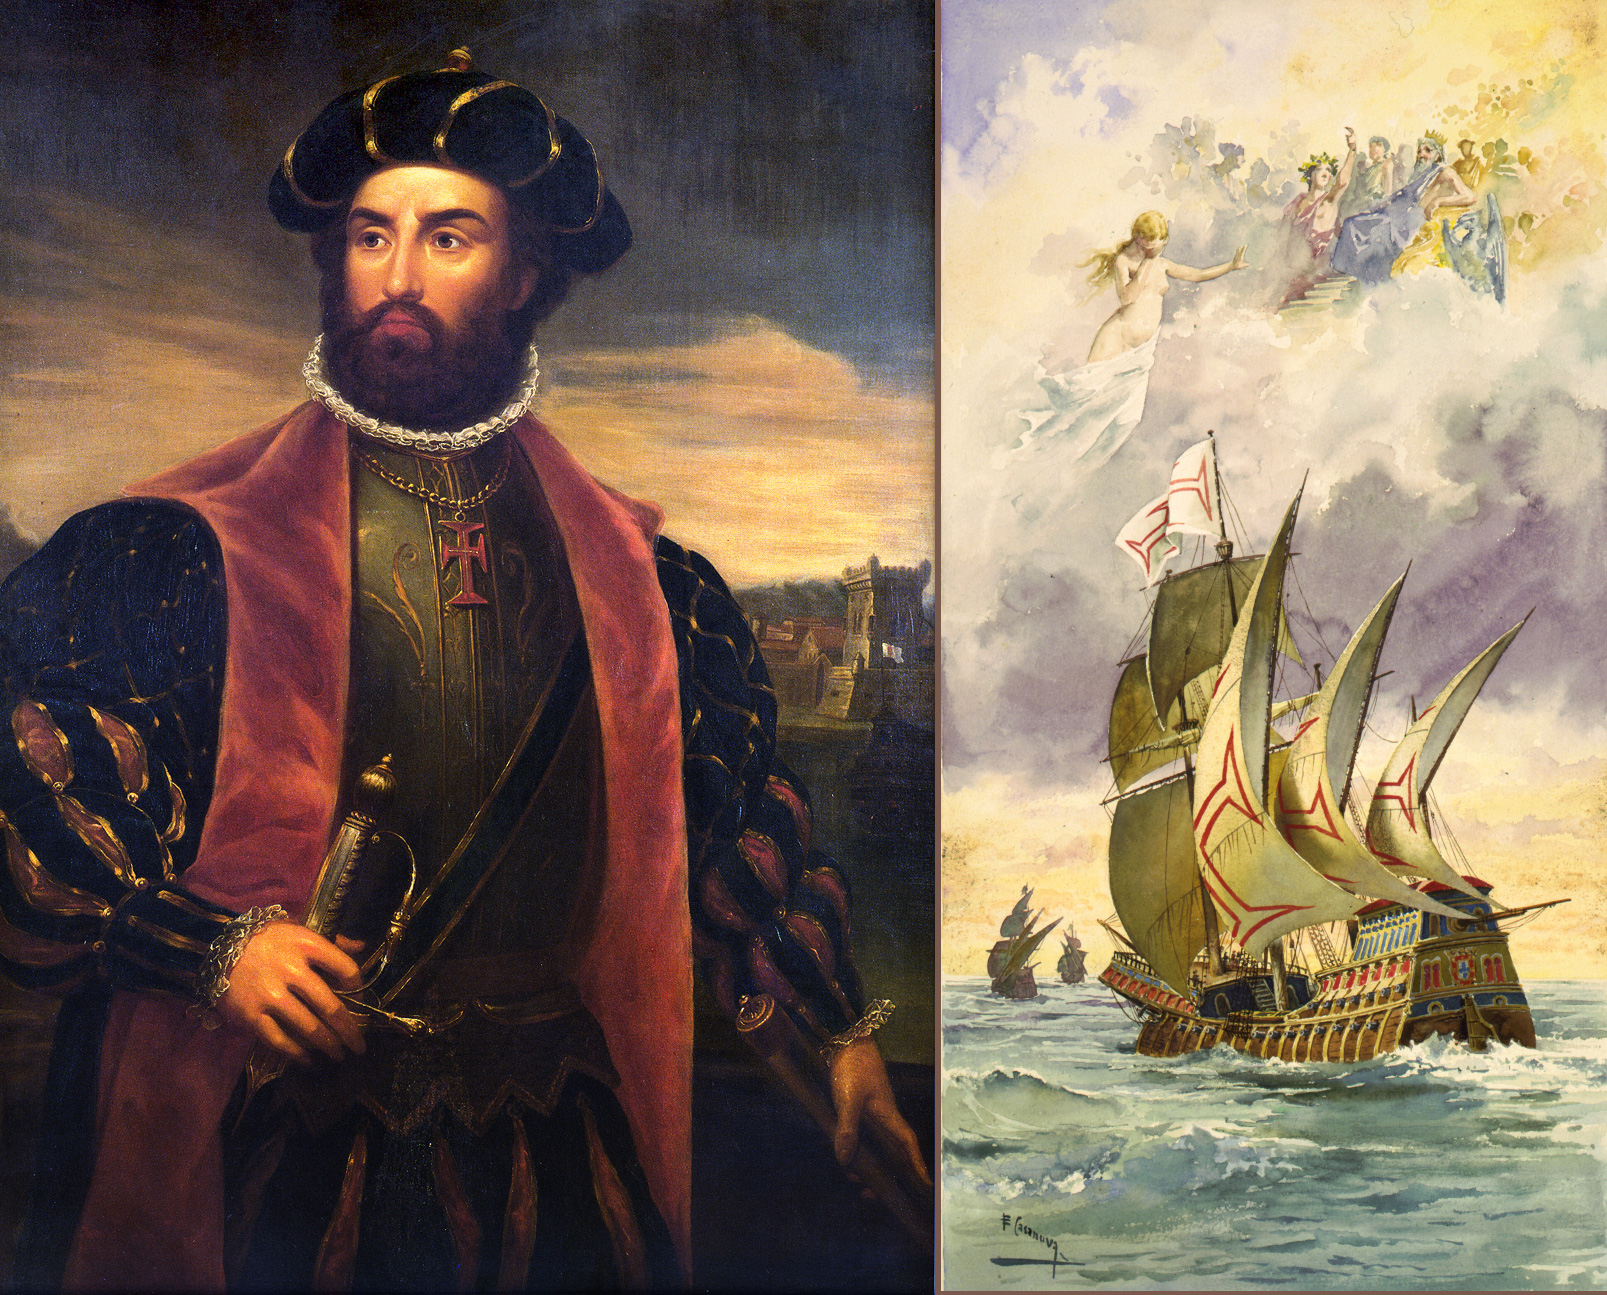 Vasco da Gama sets sail on the first direct European voyage to India